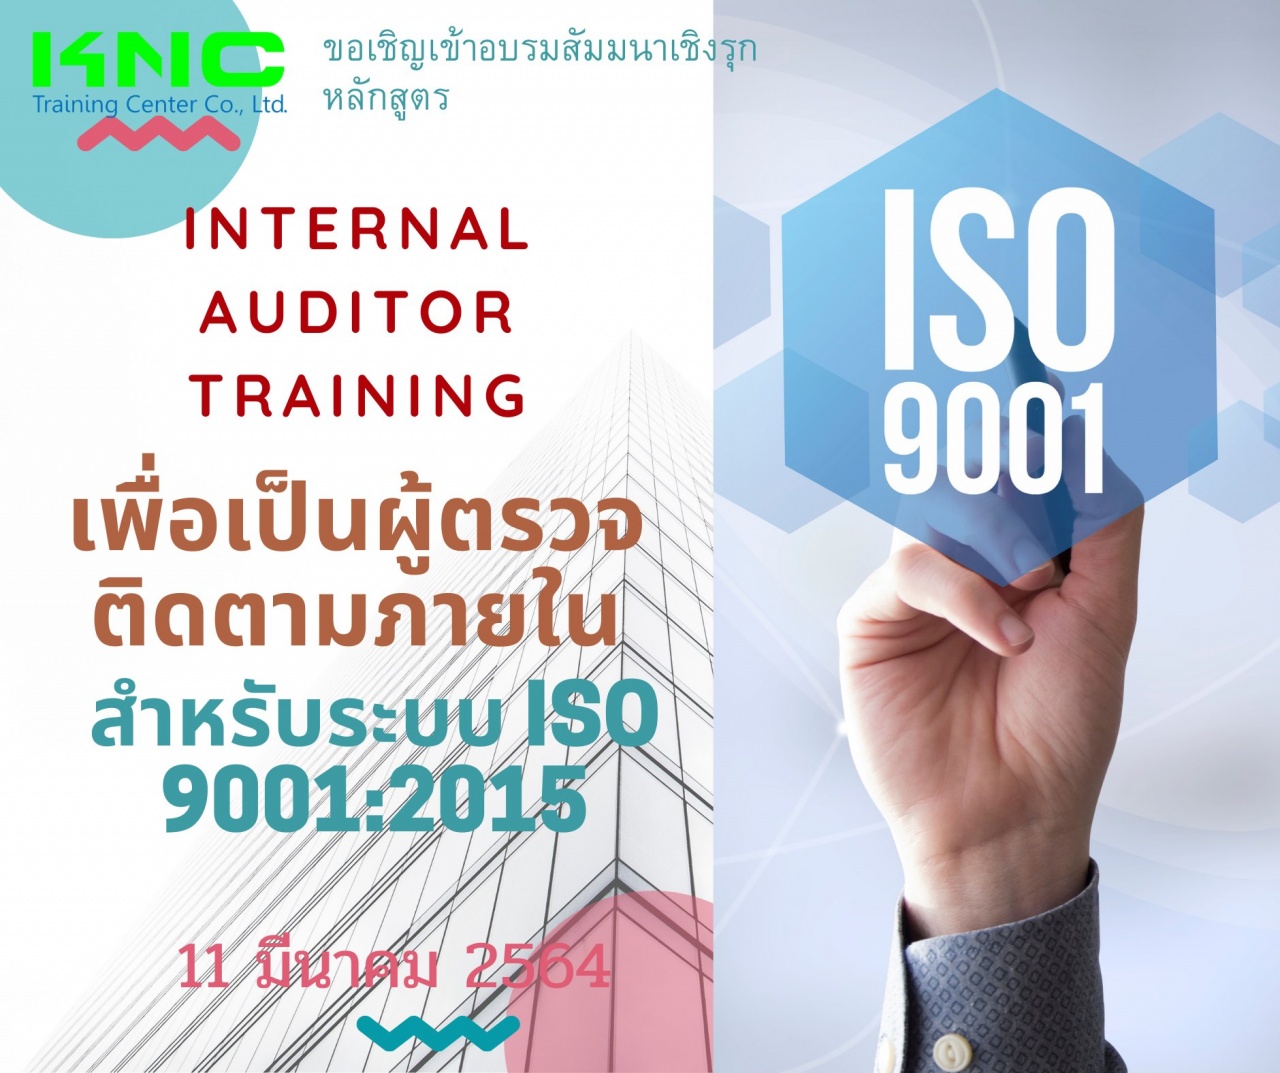 Internal Auditor Training เพื่อเป็นผู้ตรวจติดตามภายใน สำหรับระบบ ISO 9001:2015